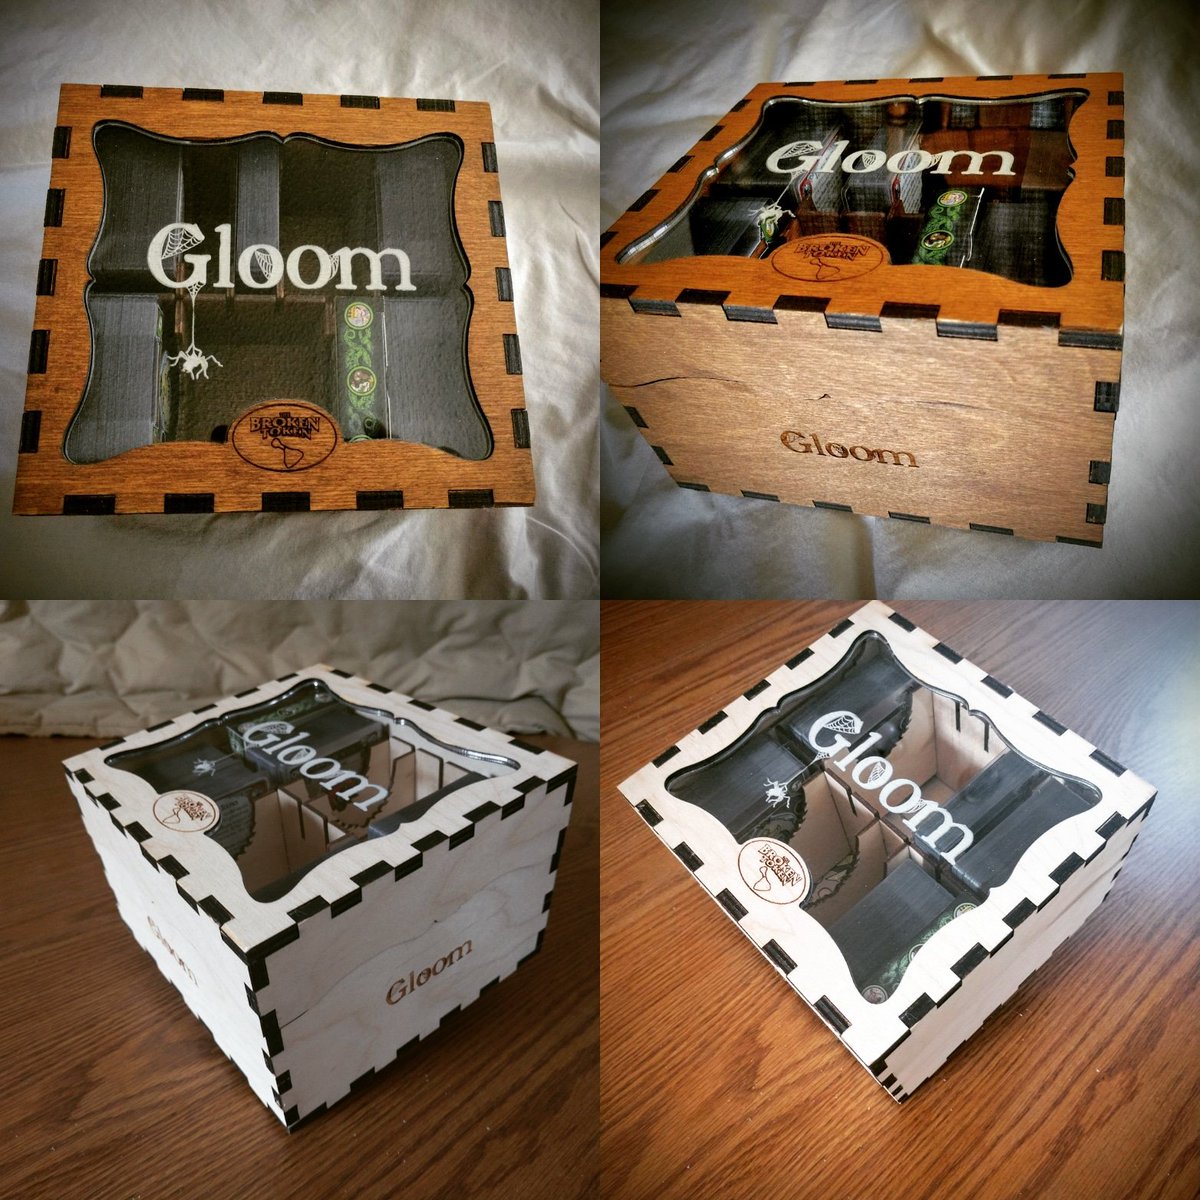 Before and after staining my Gloom Tomb by @tbt_gaming.

#Gloom #brokentoken #gamenight #boardgames #boardgamesthattellstories #kidsfavorite #cardgame #bgg #boardgame